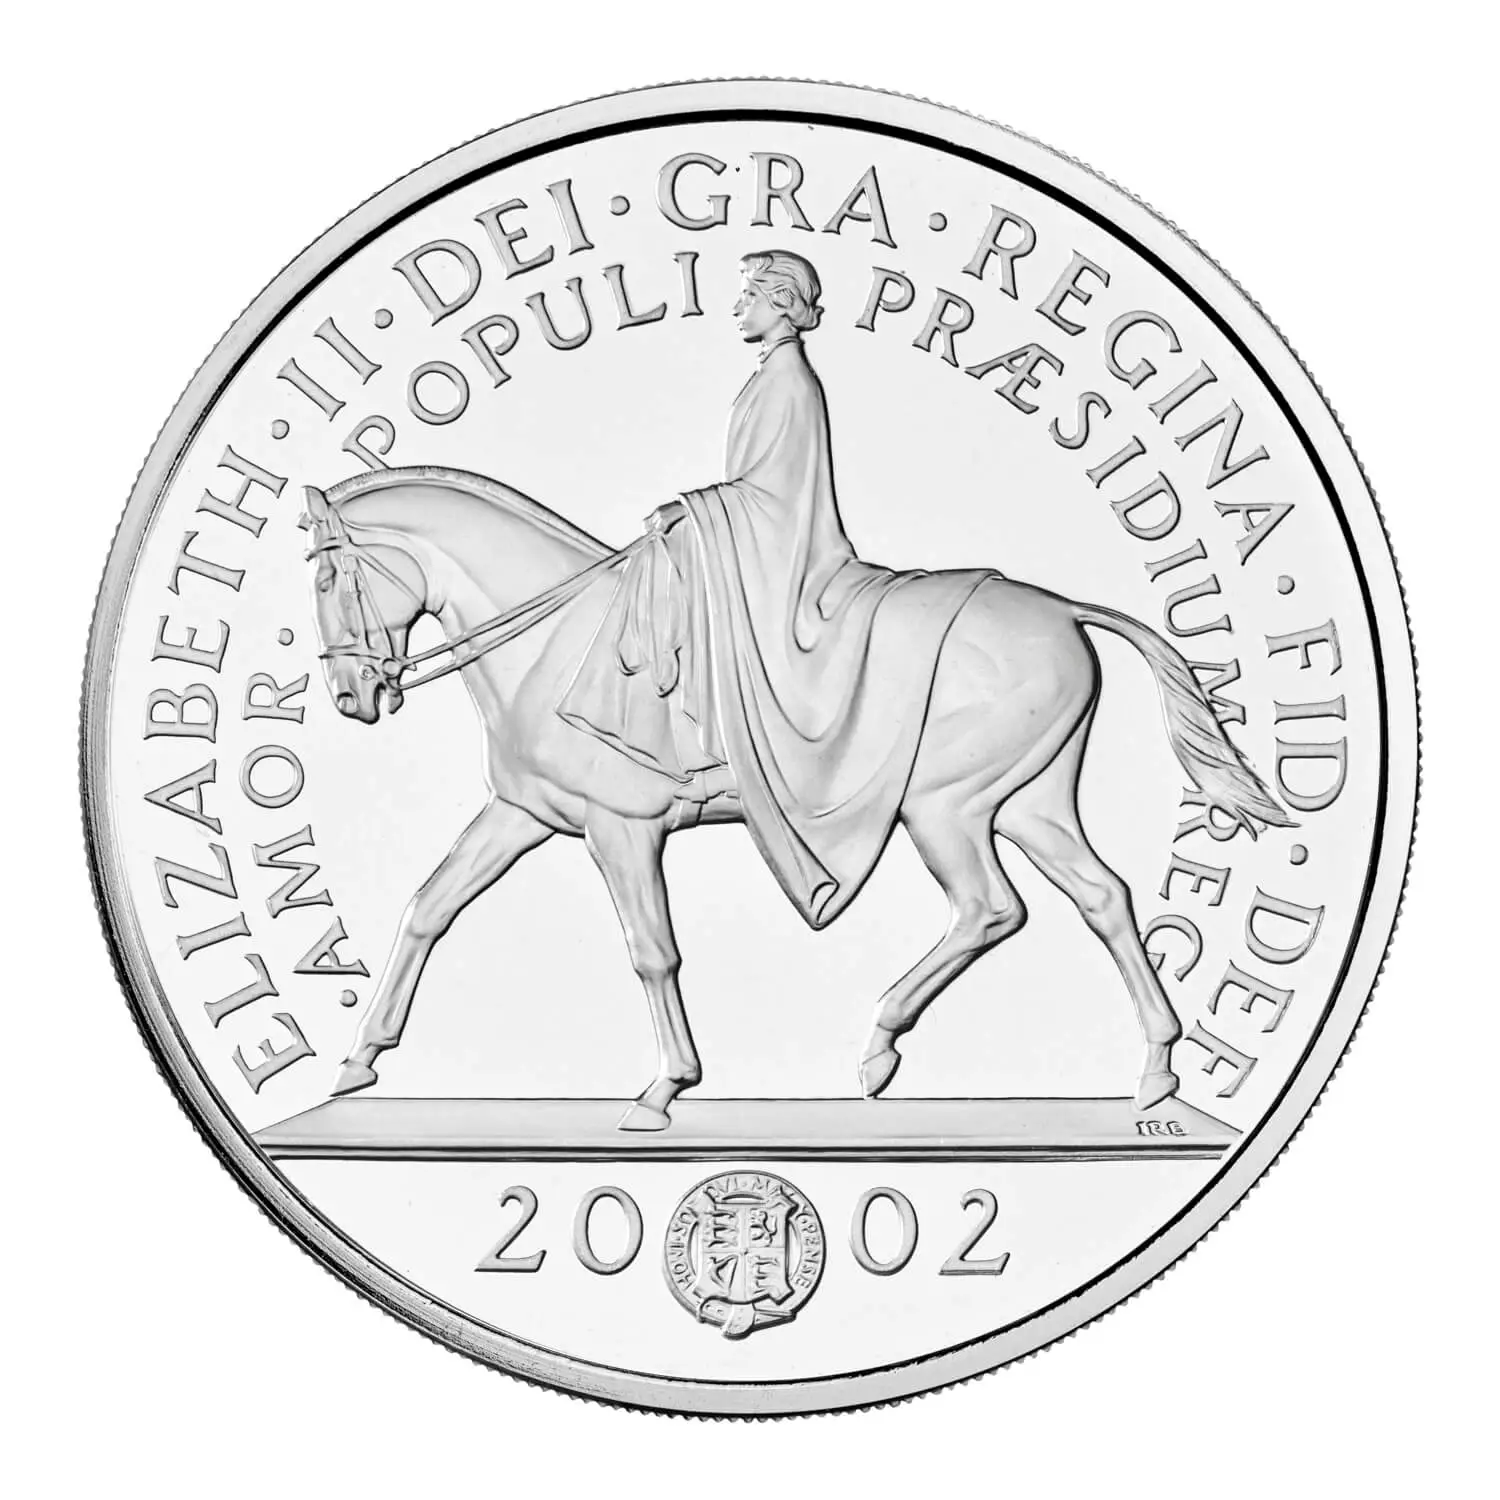 2002 Golden Jubilee £5 Coin Reverse Design